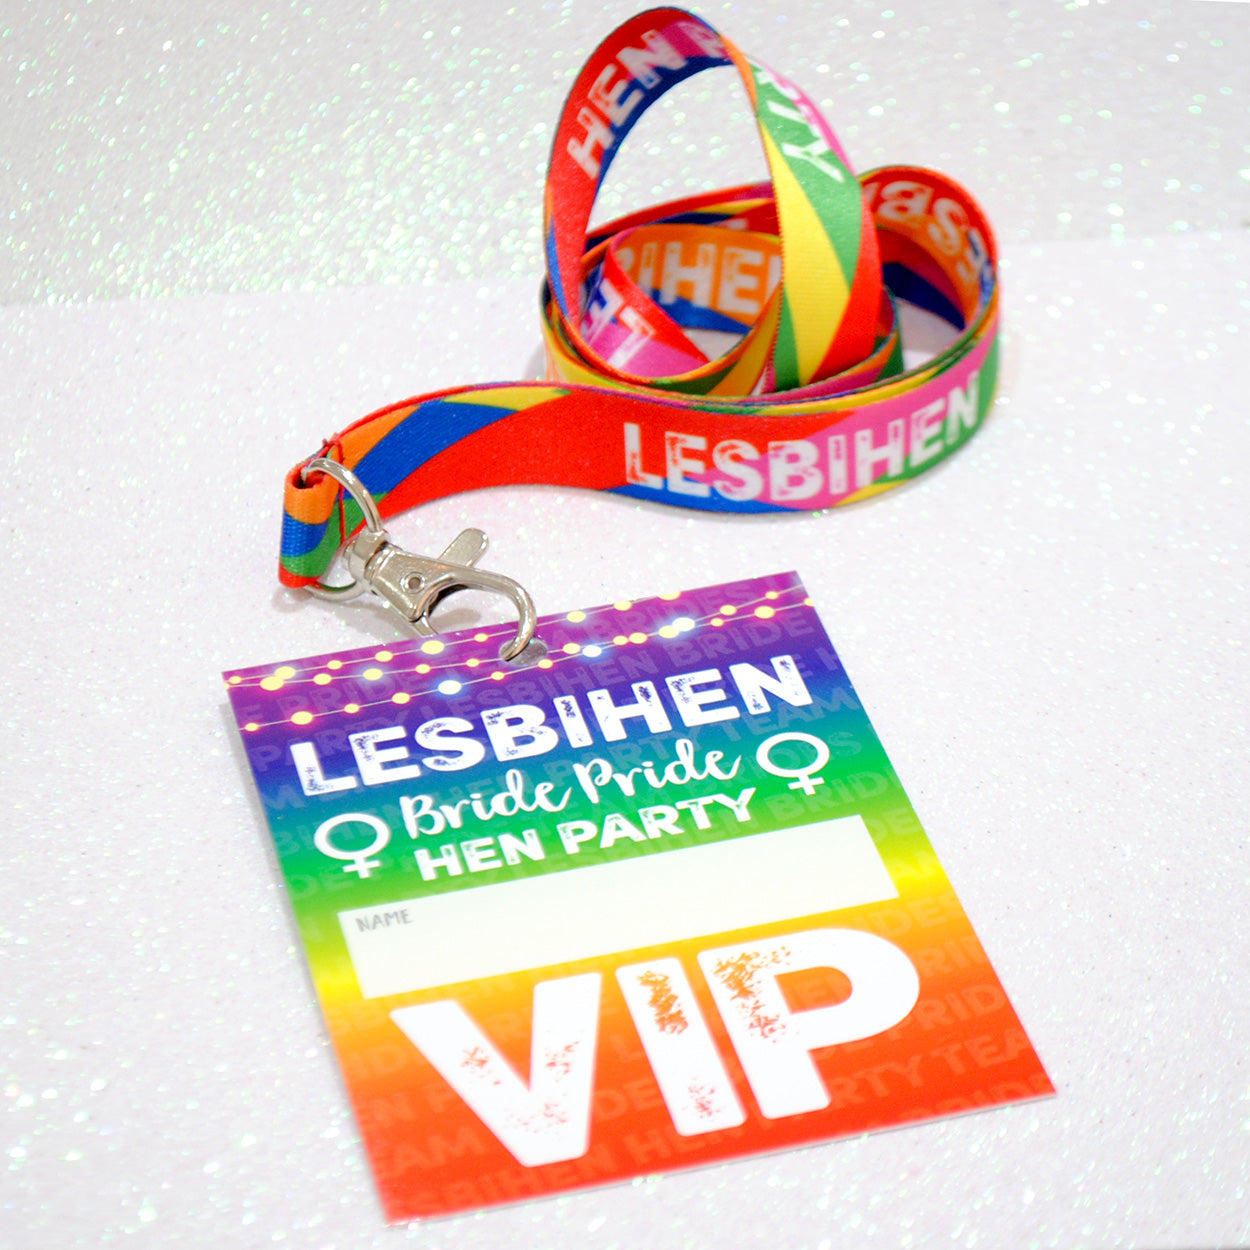 LESBIHEN ® VIP Pass Hen Party Lanyards ~ Lesbian/Gay Hen Party Favours